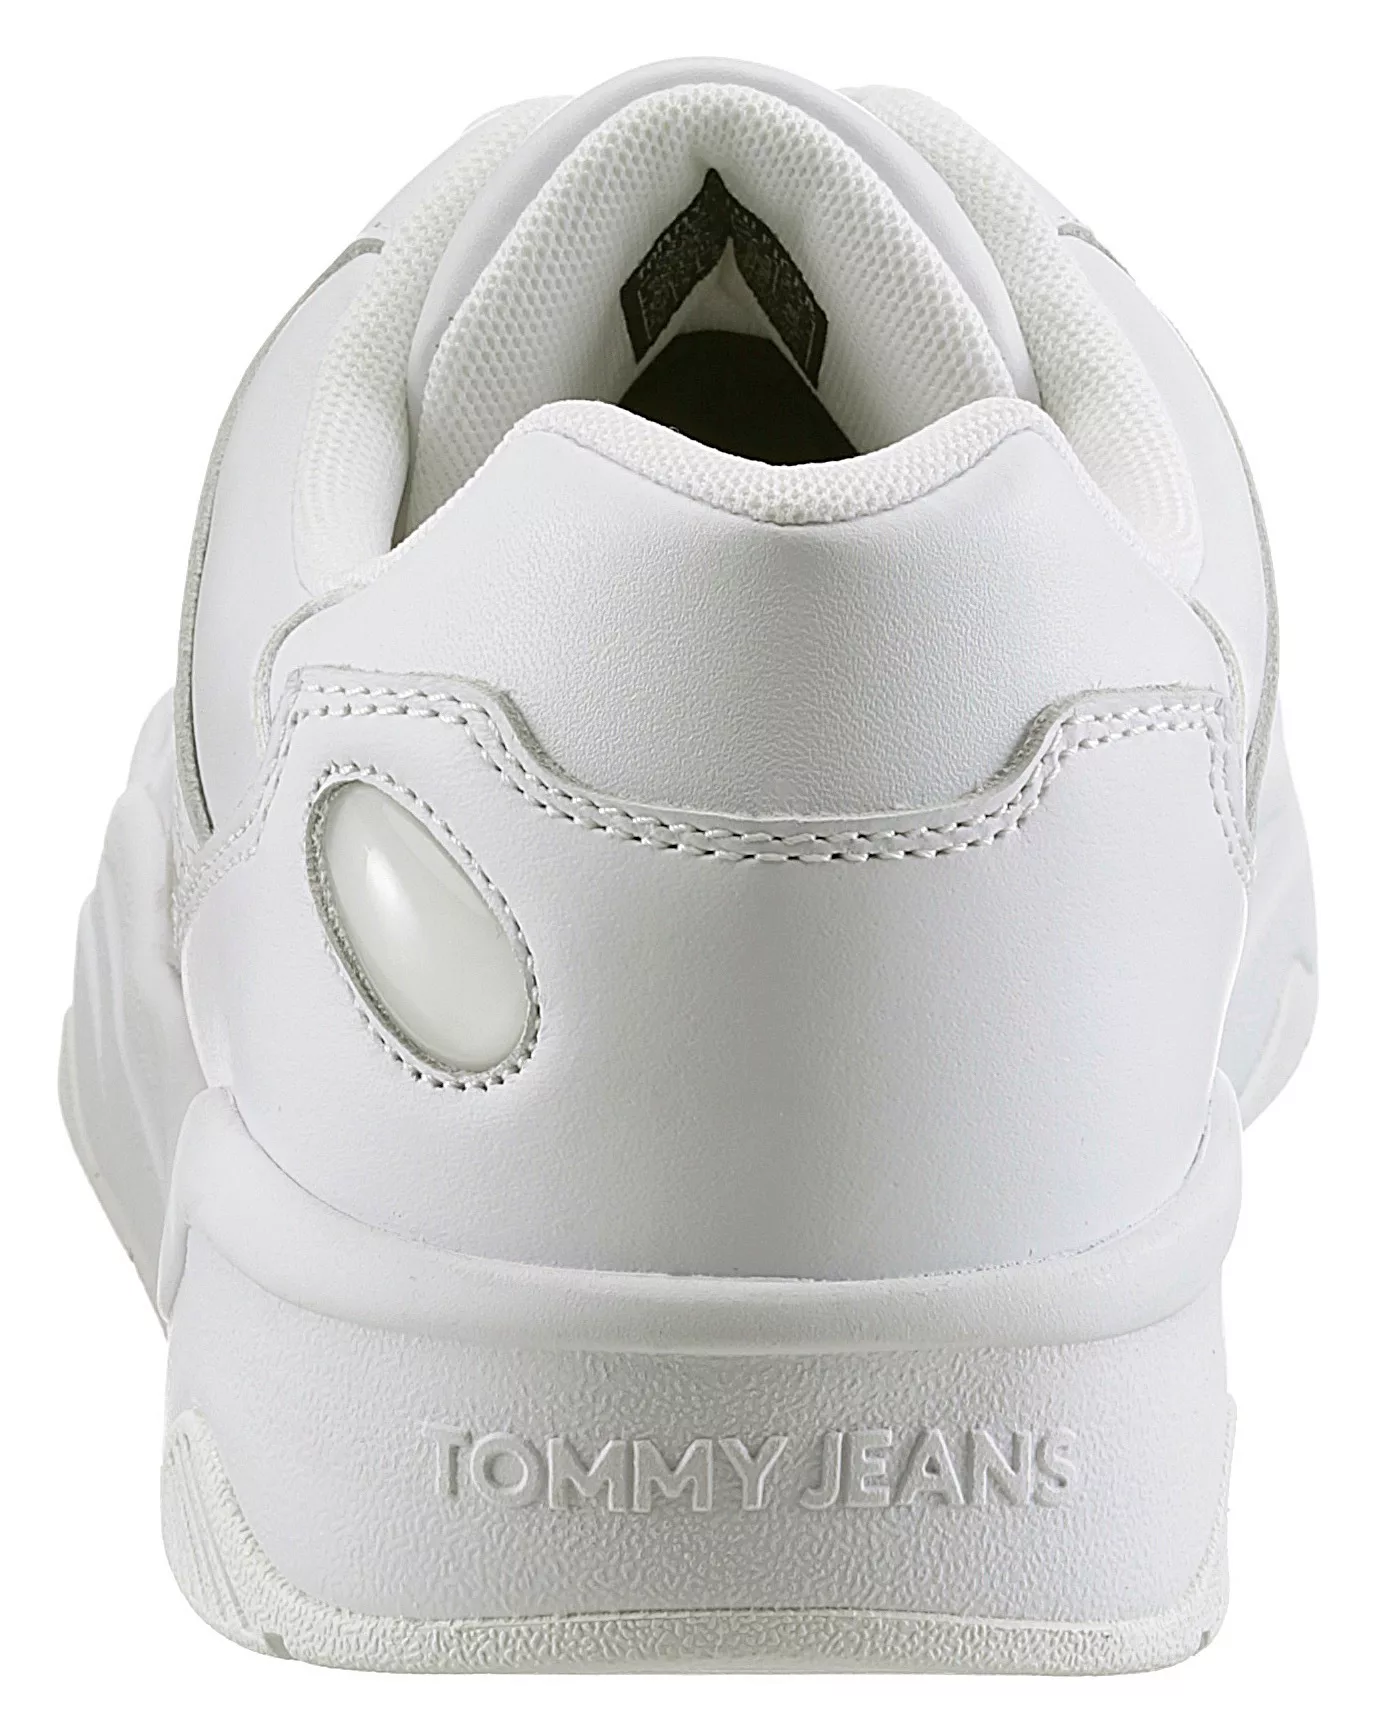 Tommy Jeans Sneaker "TJM LEATHER OUTSOLE COLOR", im Basket Look, Freizeitsc günstig online kaufen